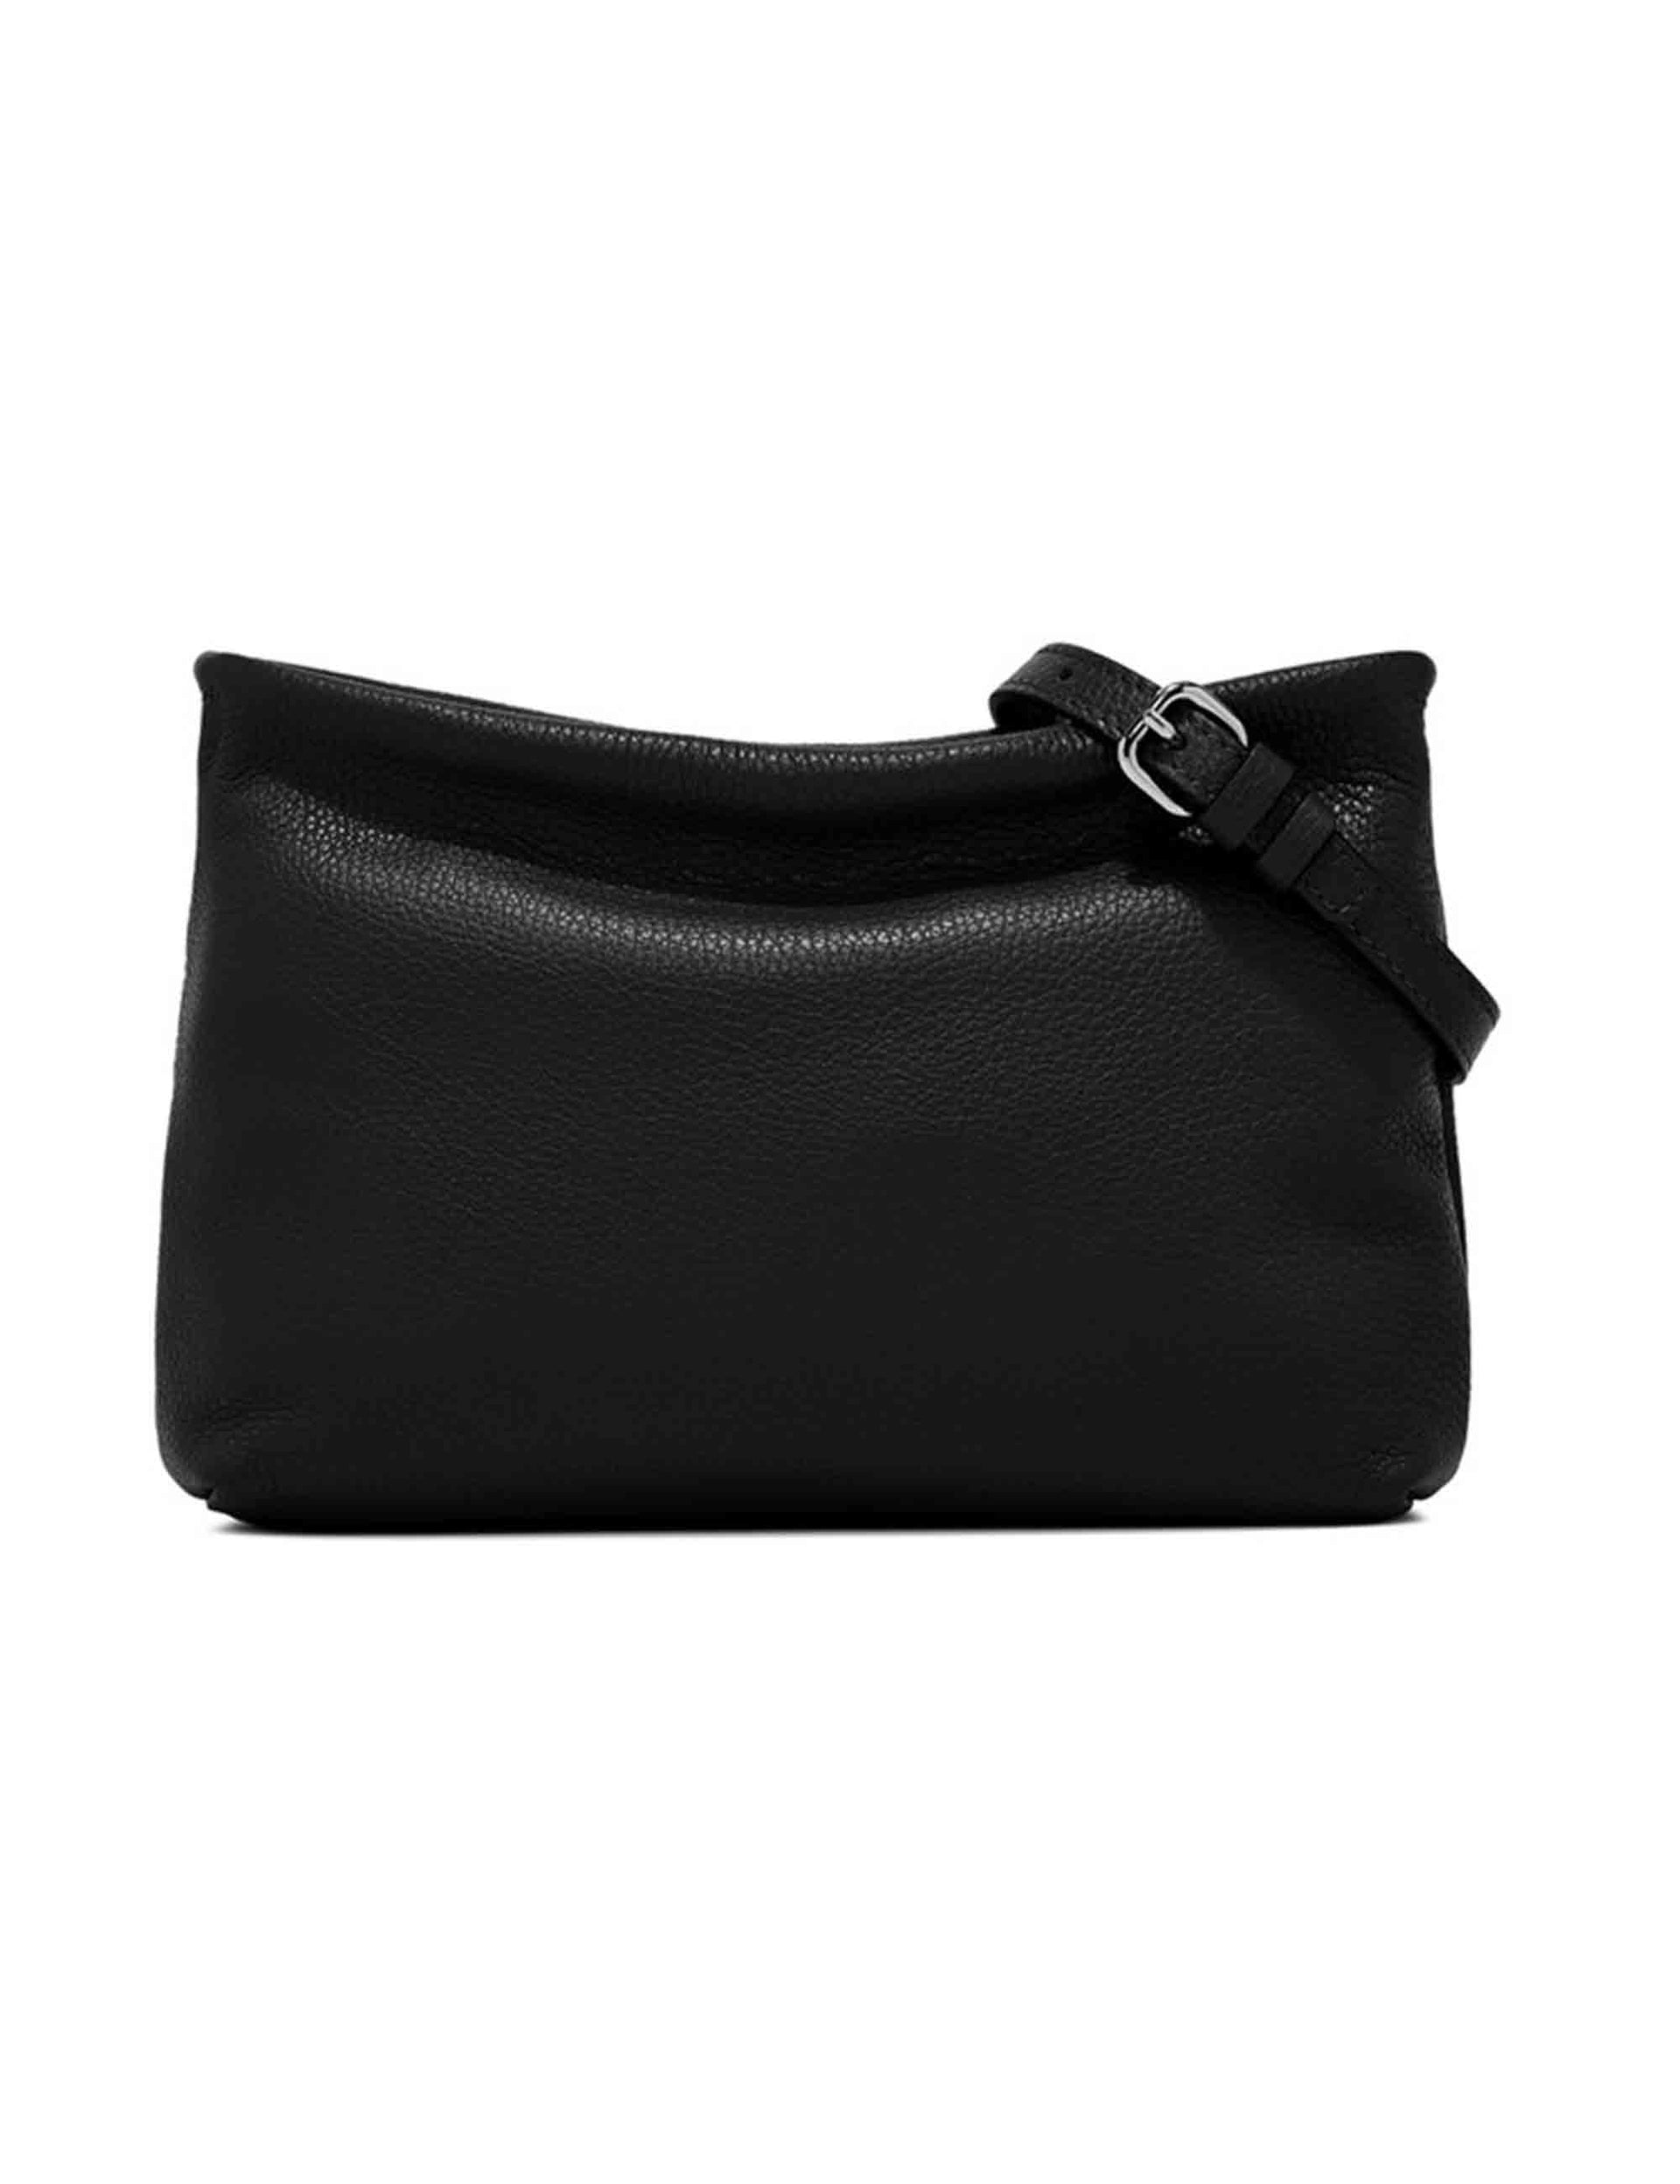 Brenda women's shoulder bags in black leather with removable shoulder strap